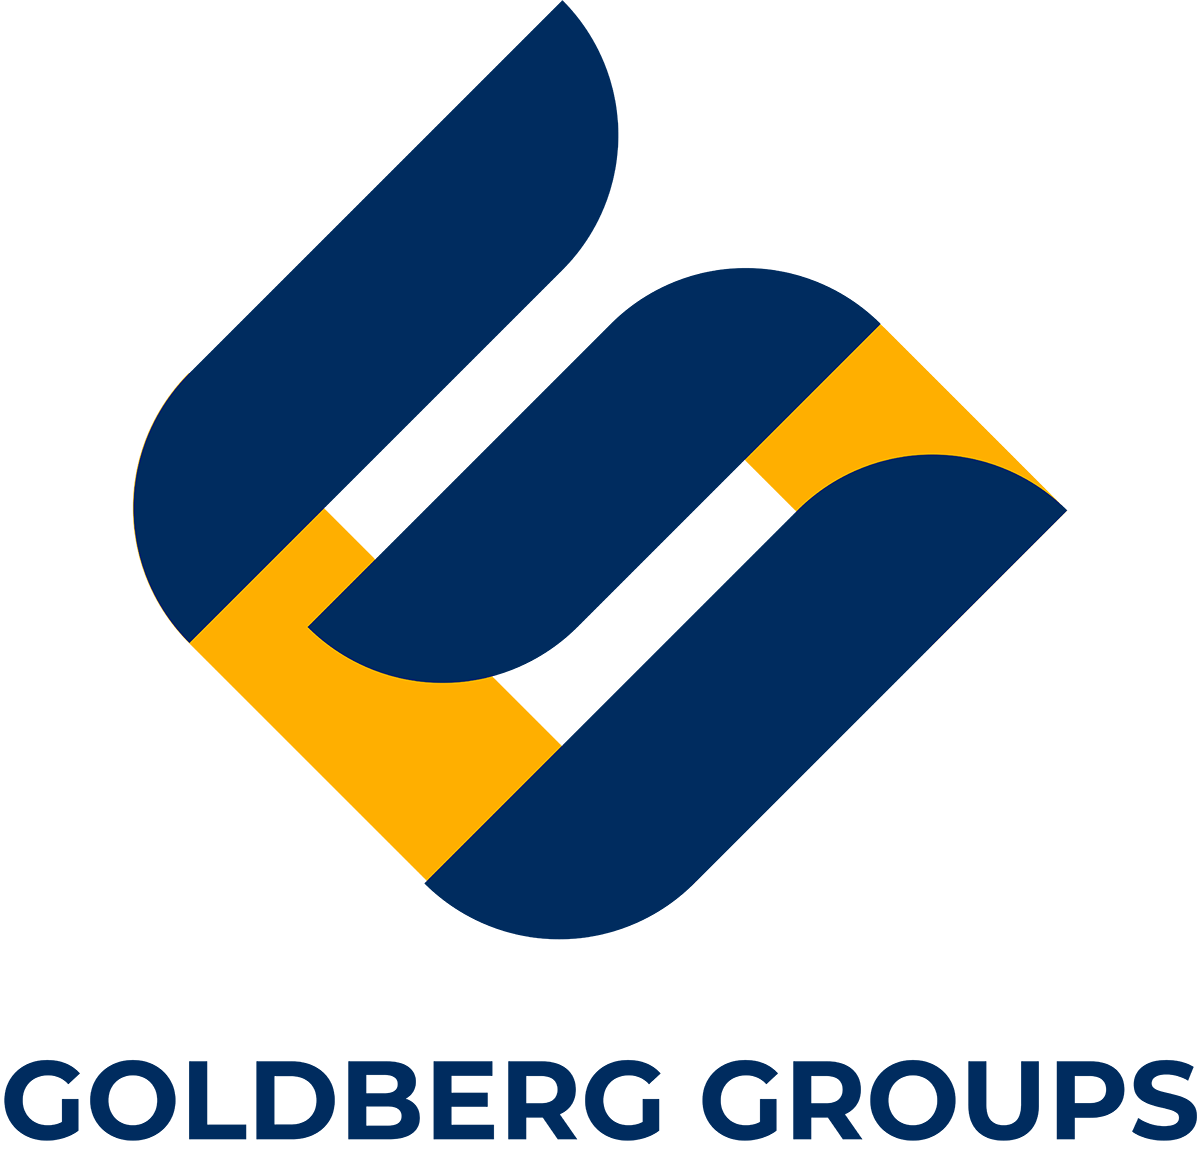 Goldberg Groups